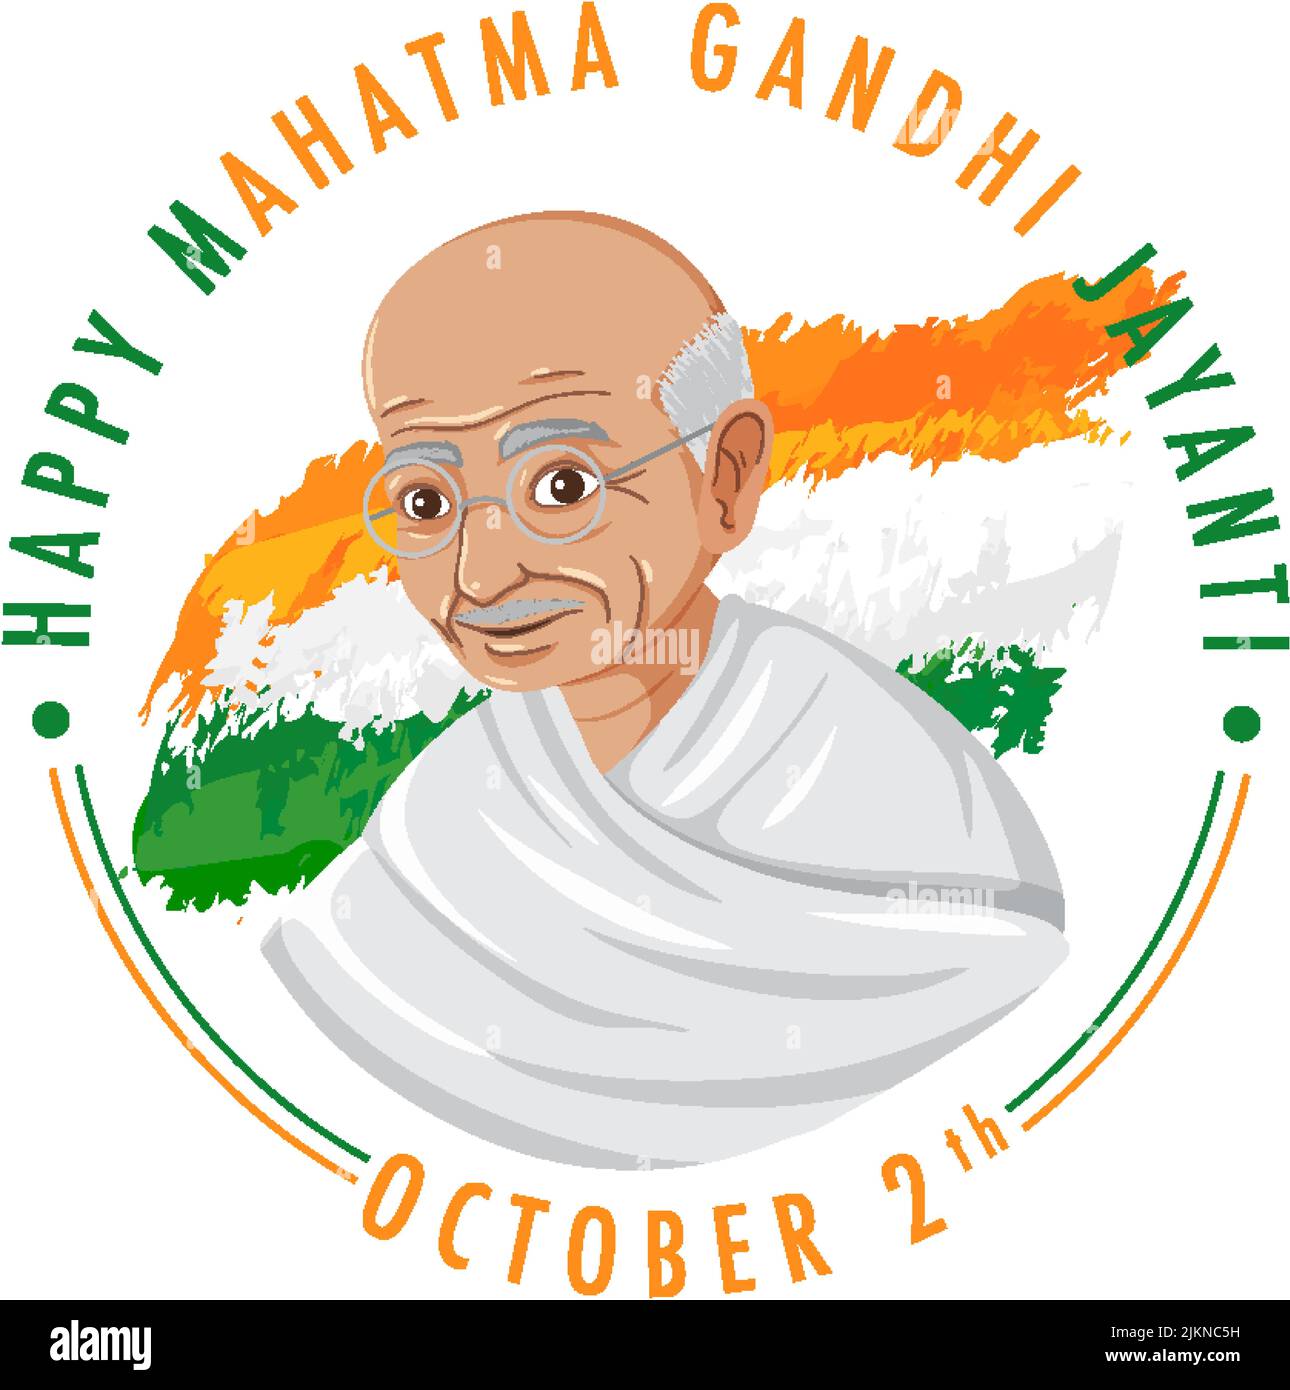 Mahatma gandhi cartoon hi-res stock photography and images - Alamy